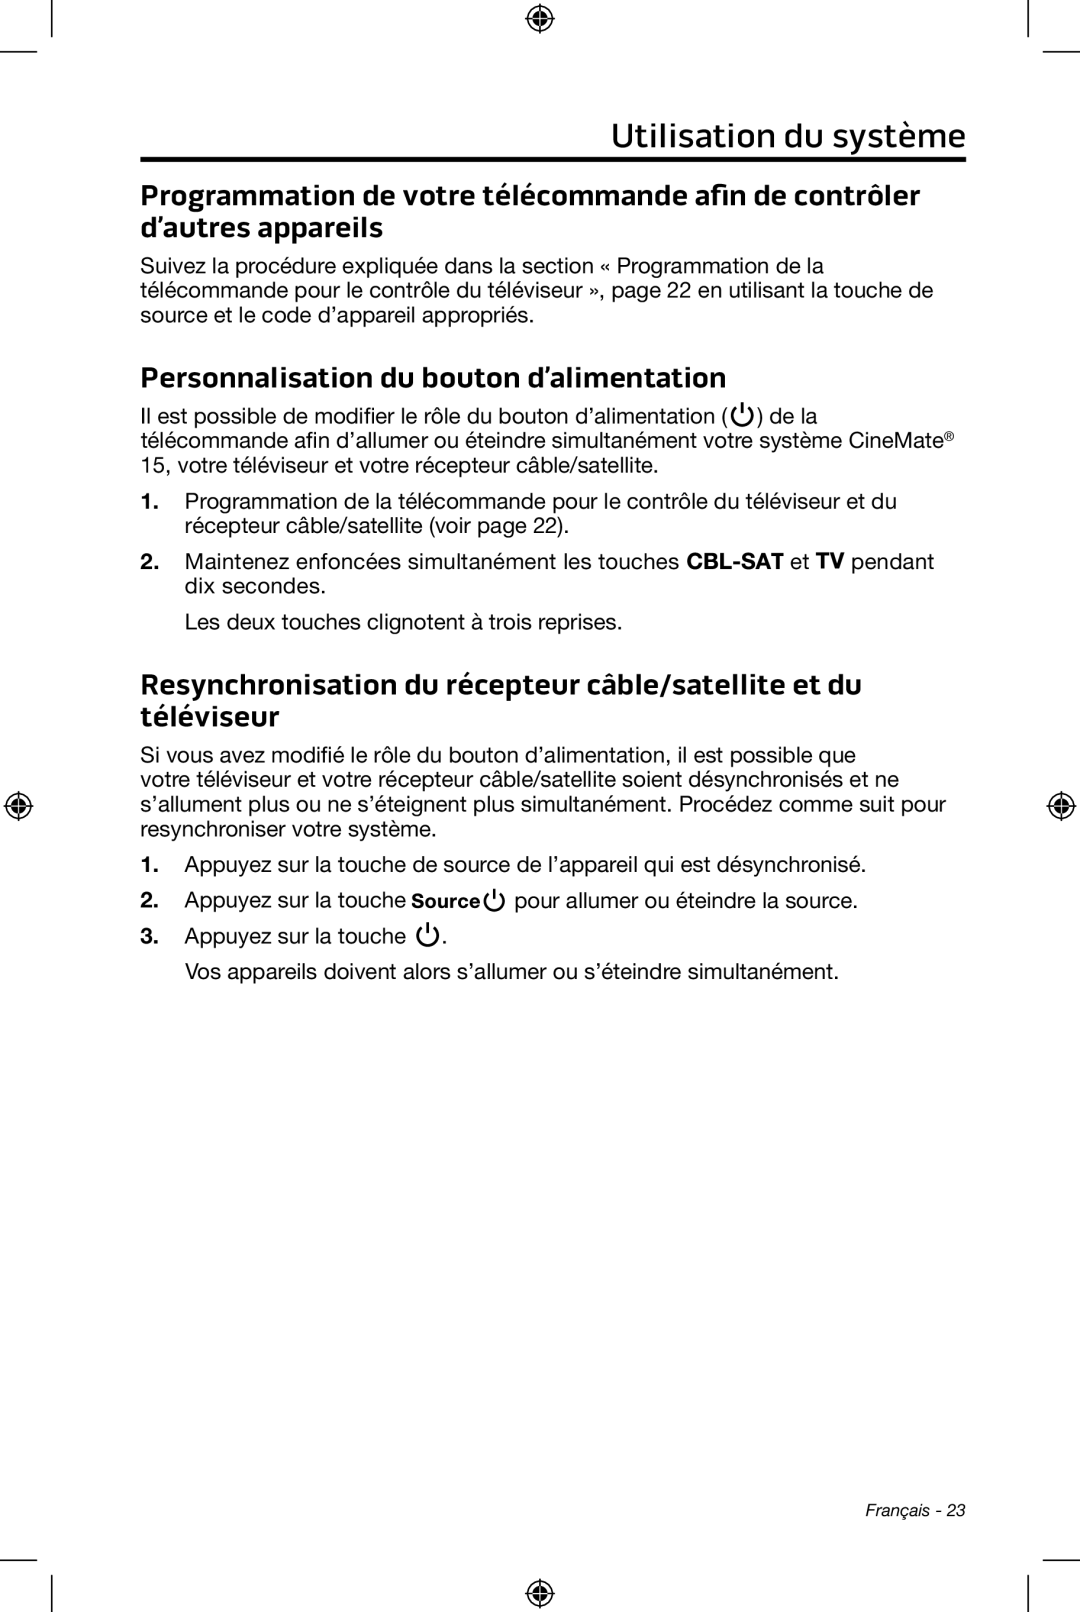 Bose CineMate 15/10 manual Utilisation du système, Personnalisation du bouton d’alimentation 